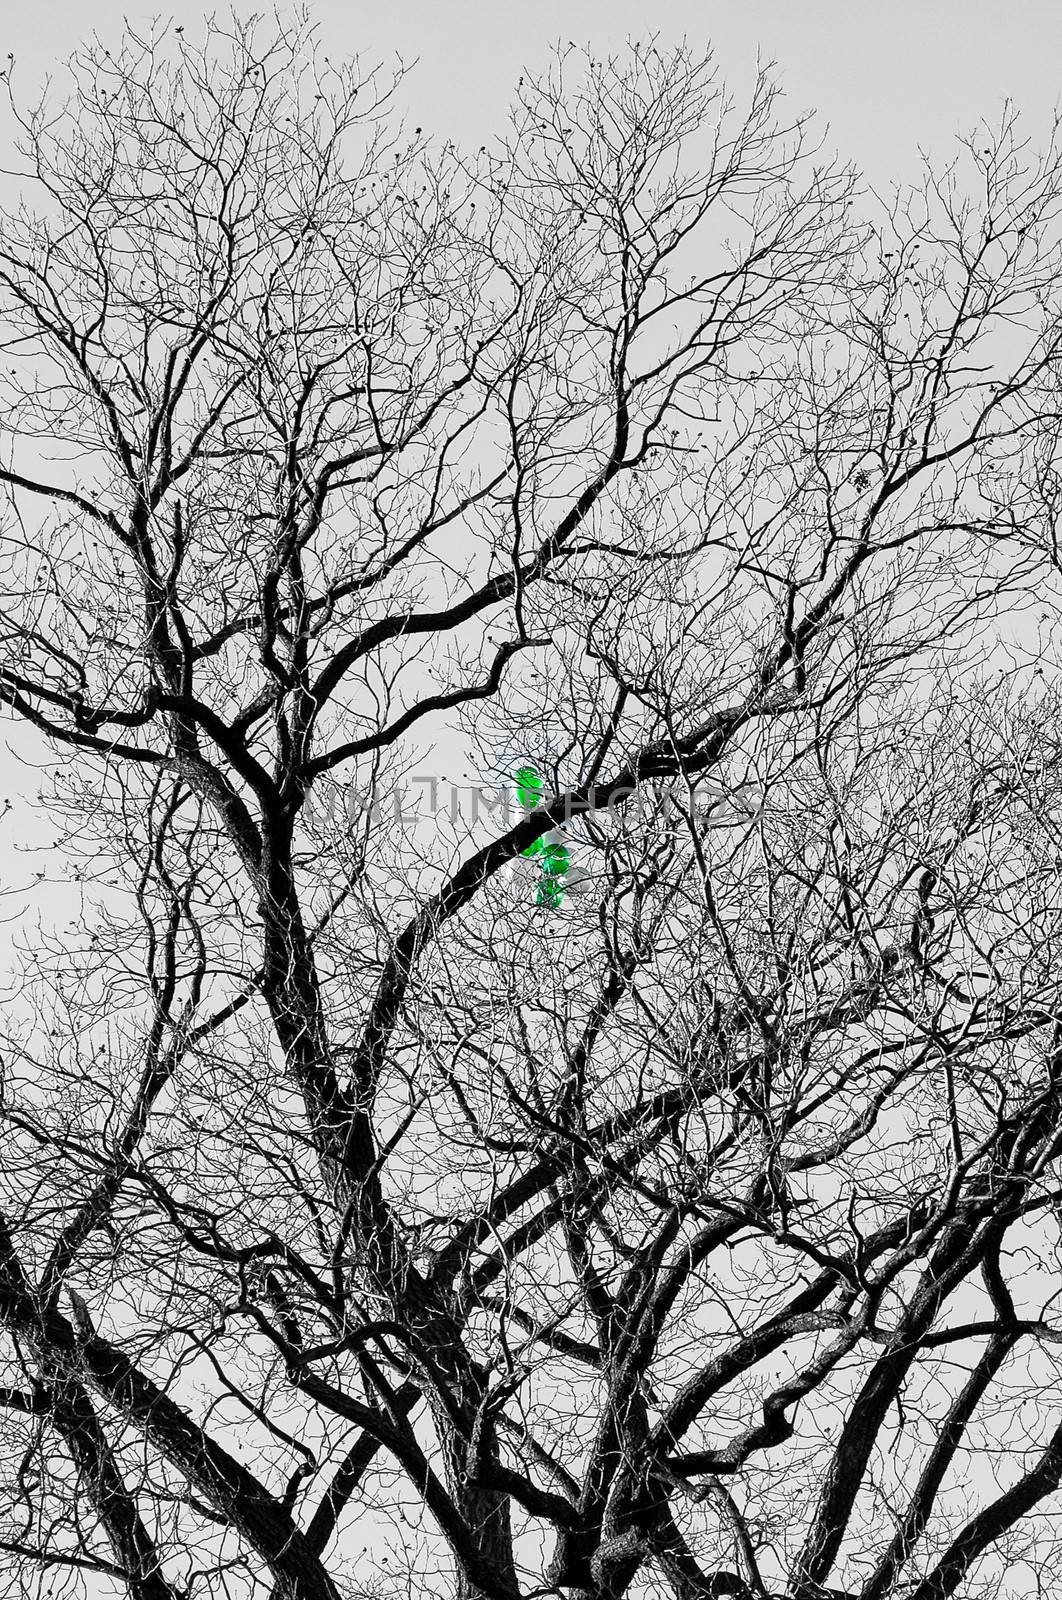 Green balloons stuck in a bare tree, Washington DC, USA